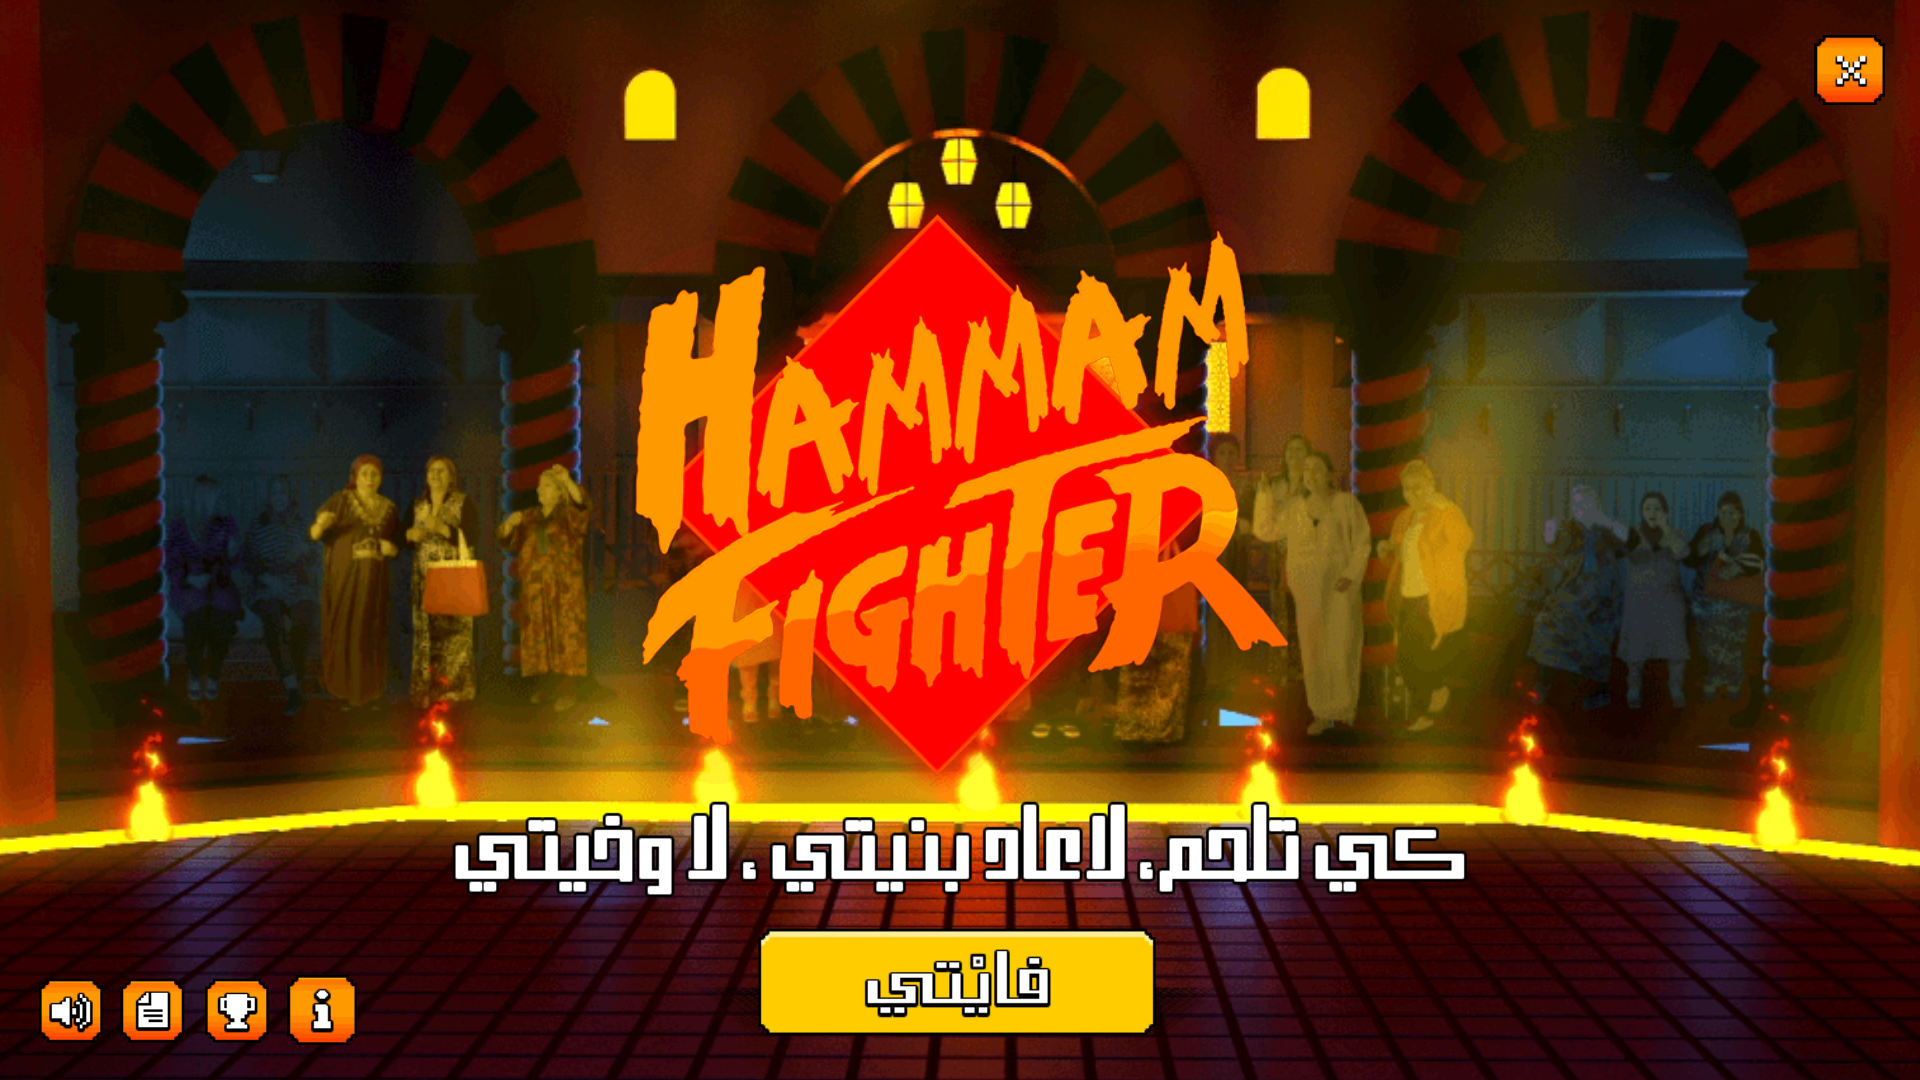 Screenshot 1 of Hammam-Kämpfer 4.0